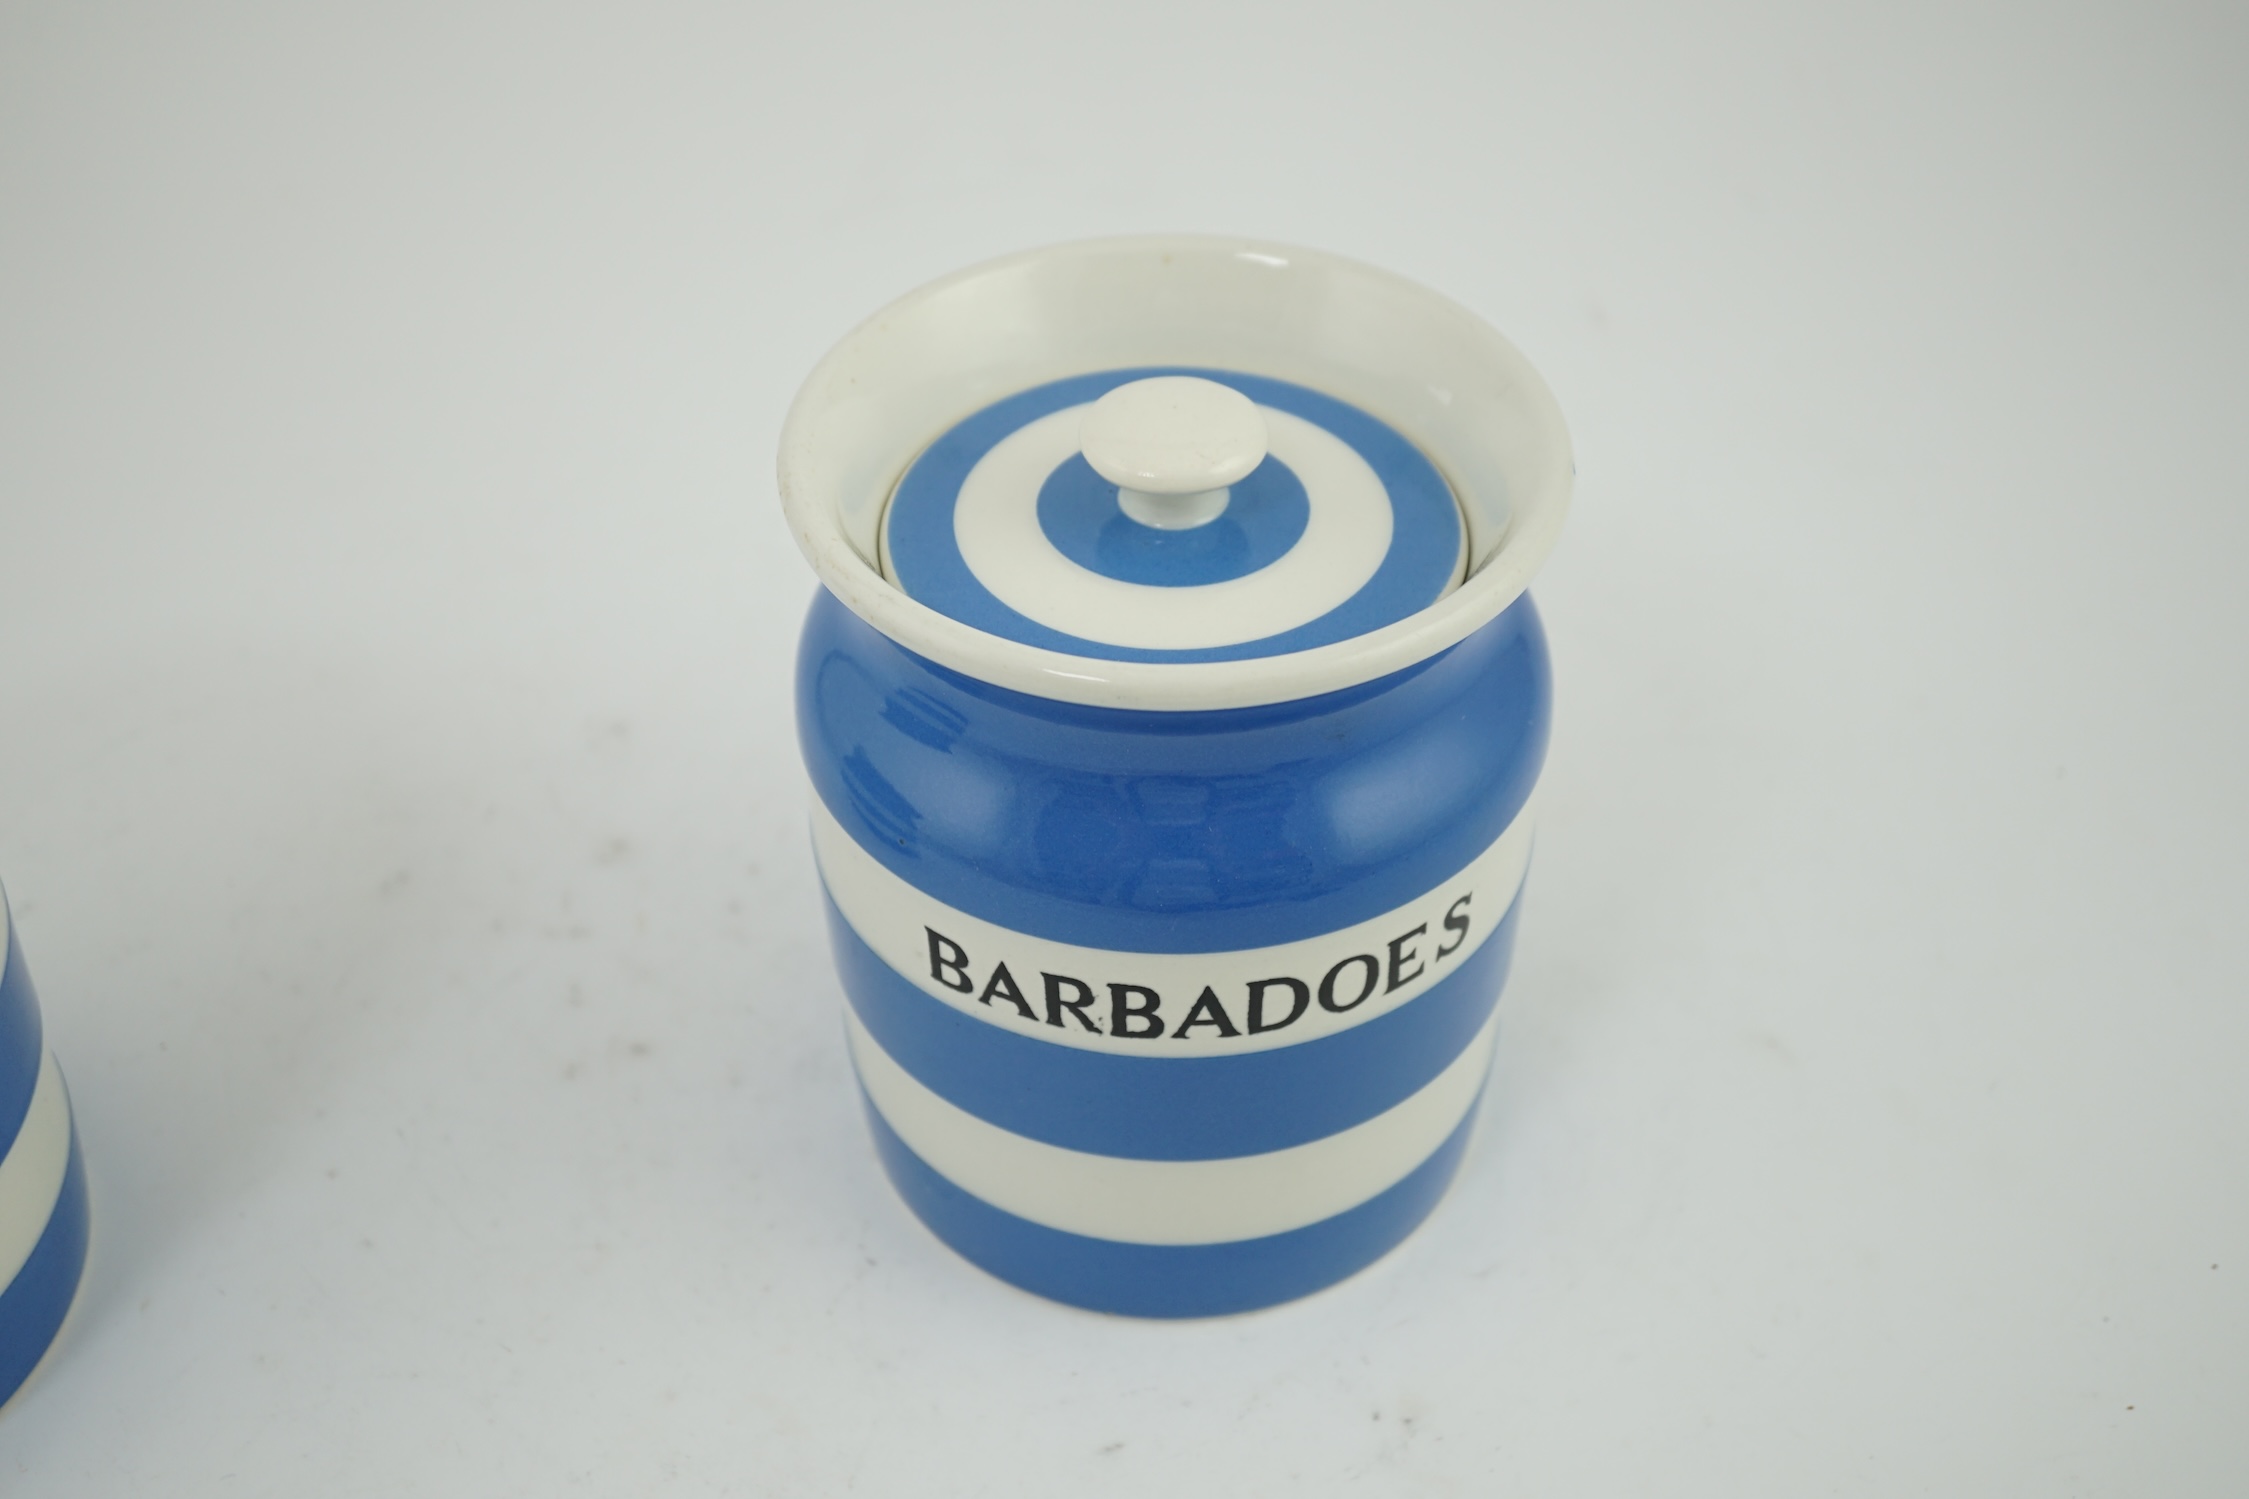 T.G.Green Cornish Kitchenware, a lidded storage jar, Barbadoes, Black Shield mark. Condition - good